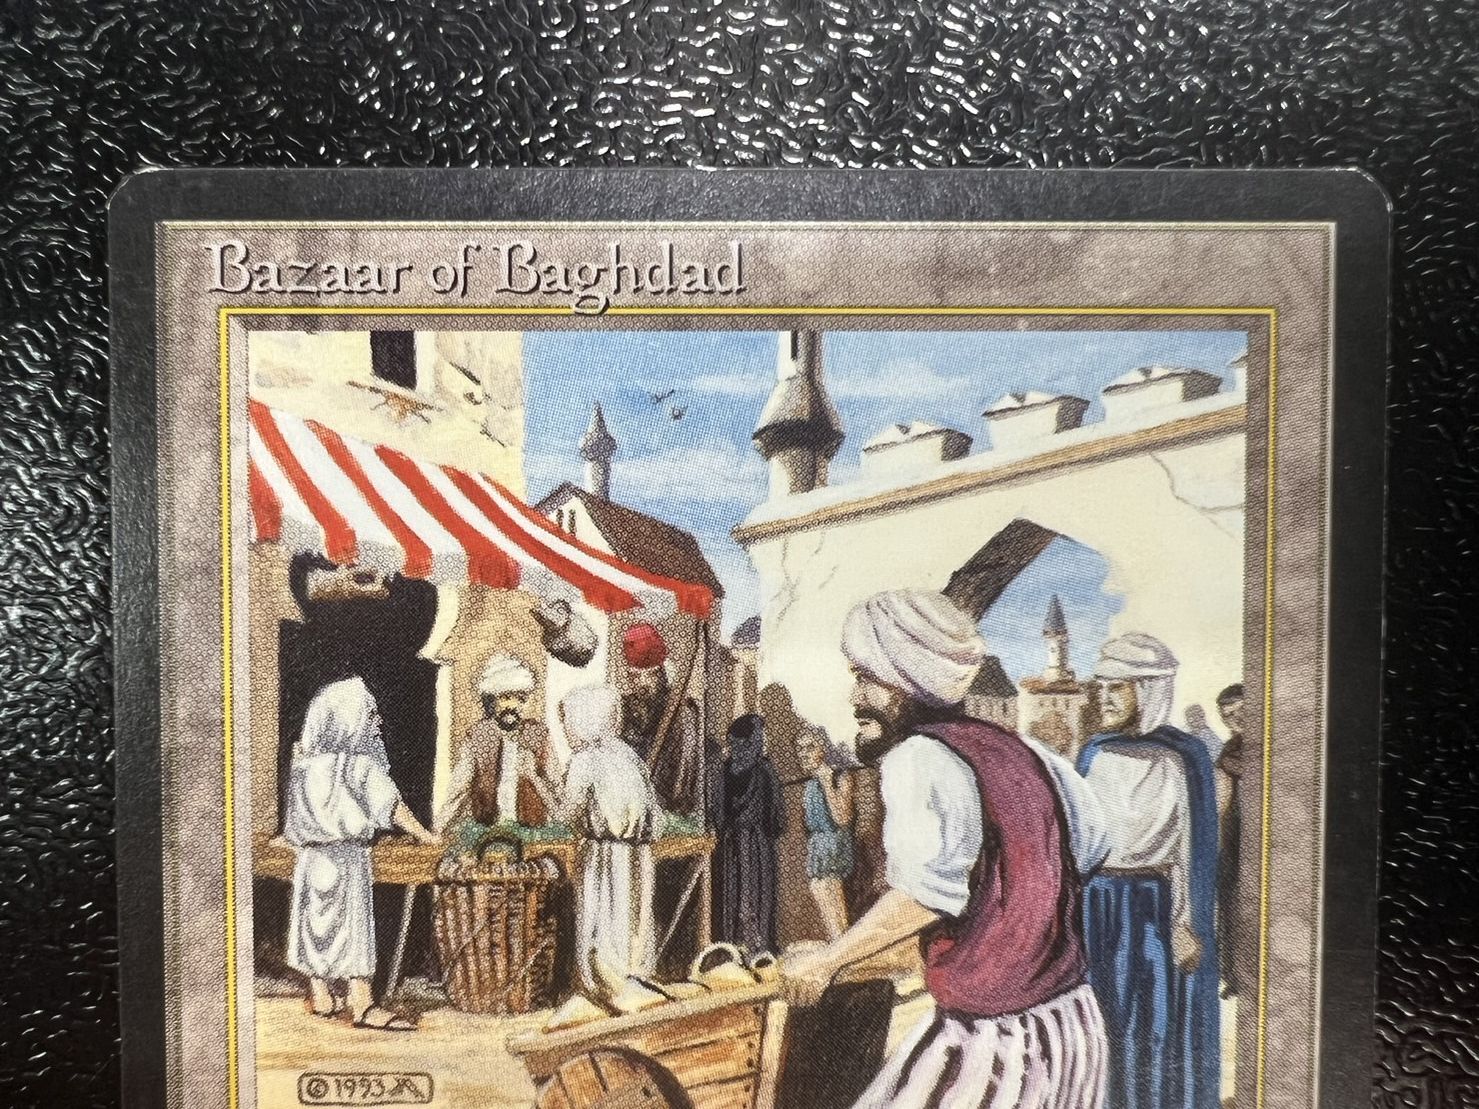 [EX]Bazaar of Baghdad《英語》【ARN】#178